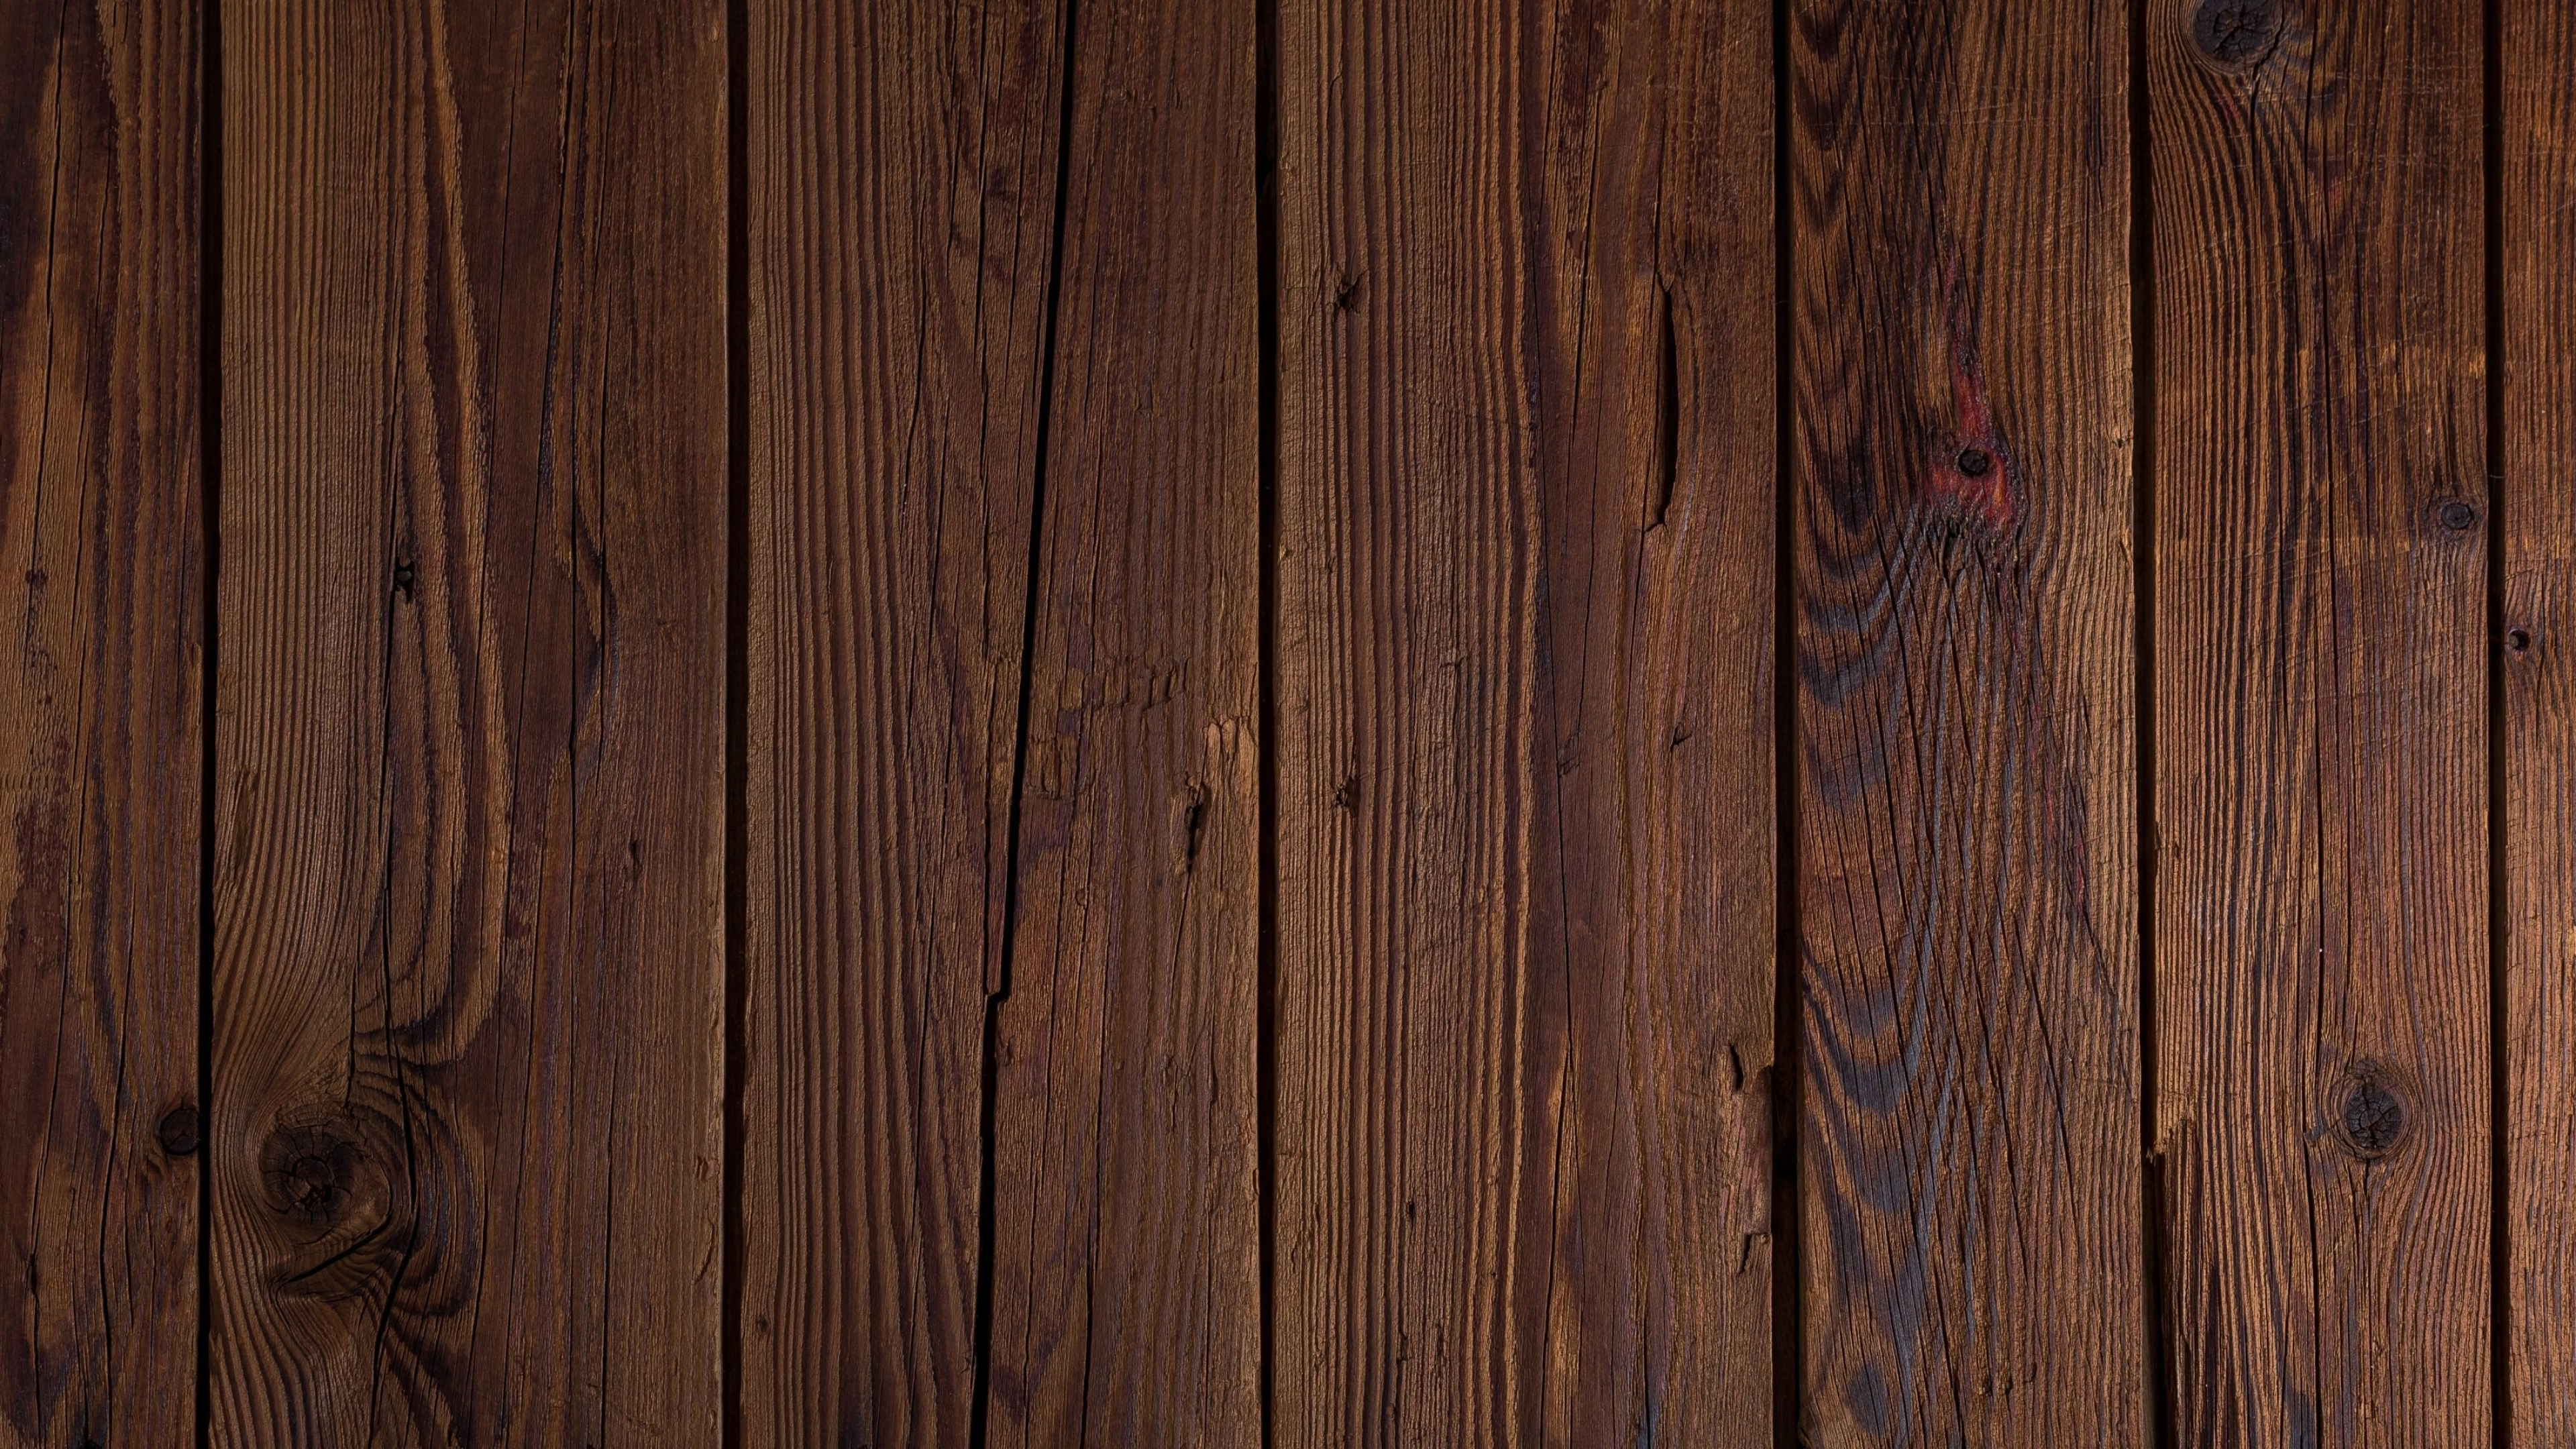 Backdrop: Wooden planks, Brown, Trees, Oak, Forest, Natural pattern, Timber. 3840x2160 4K Wallpaper.